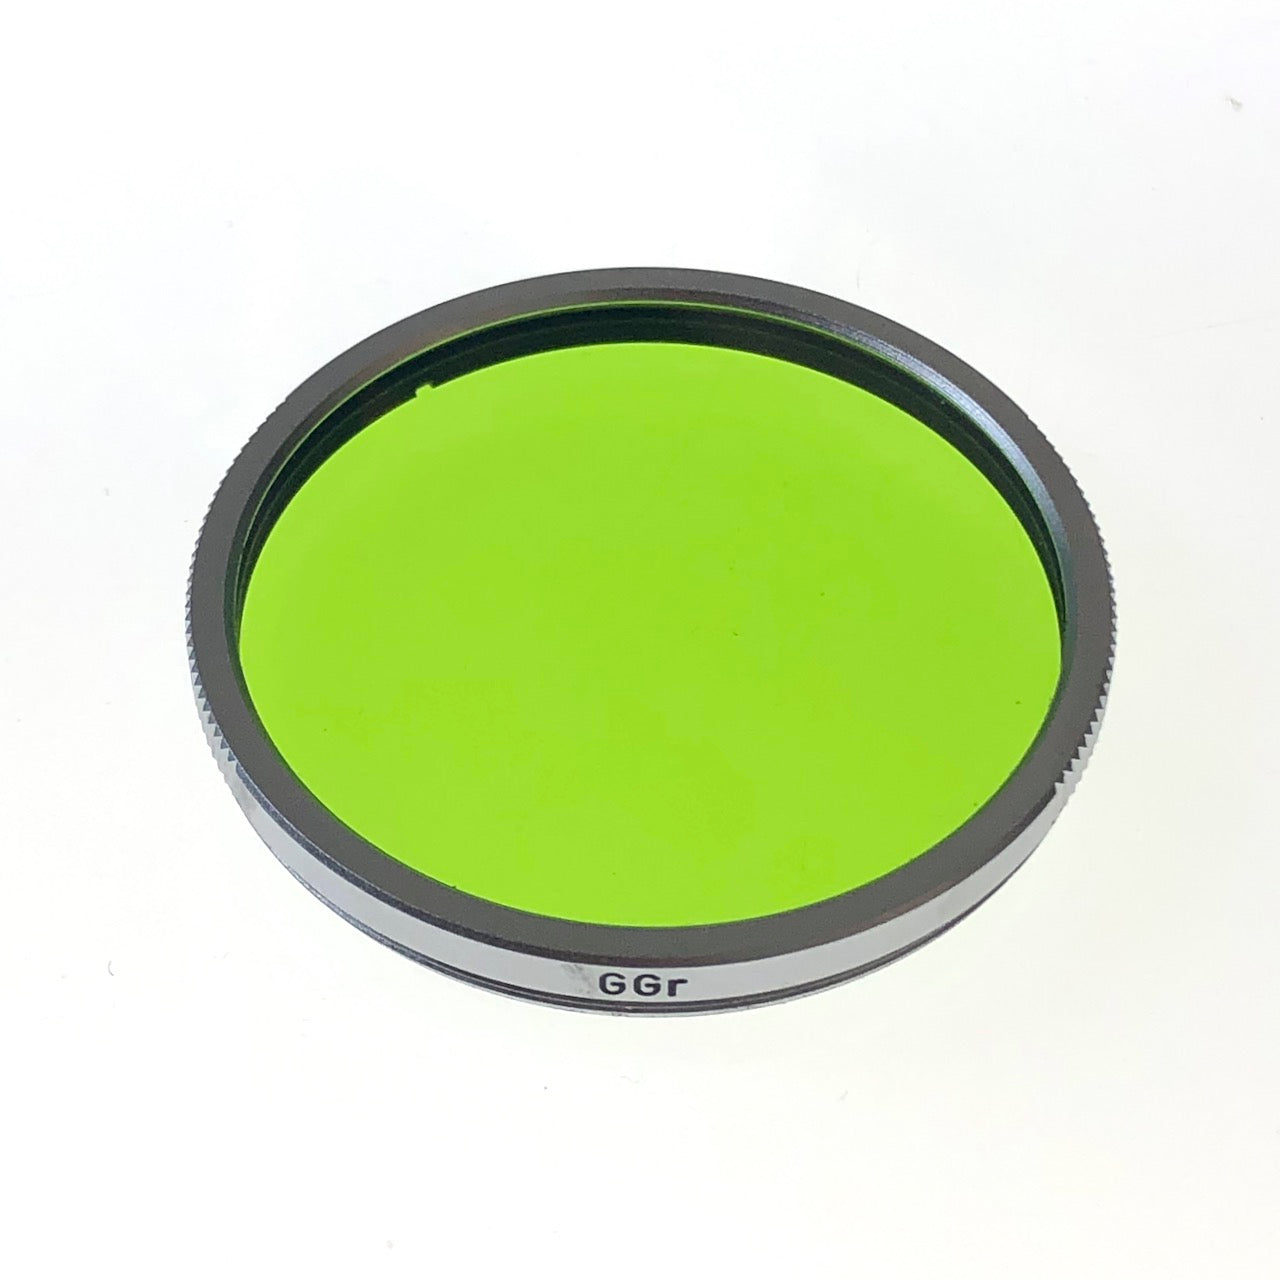 Leitz GGr (green) filter for 43mm thread.